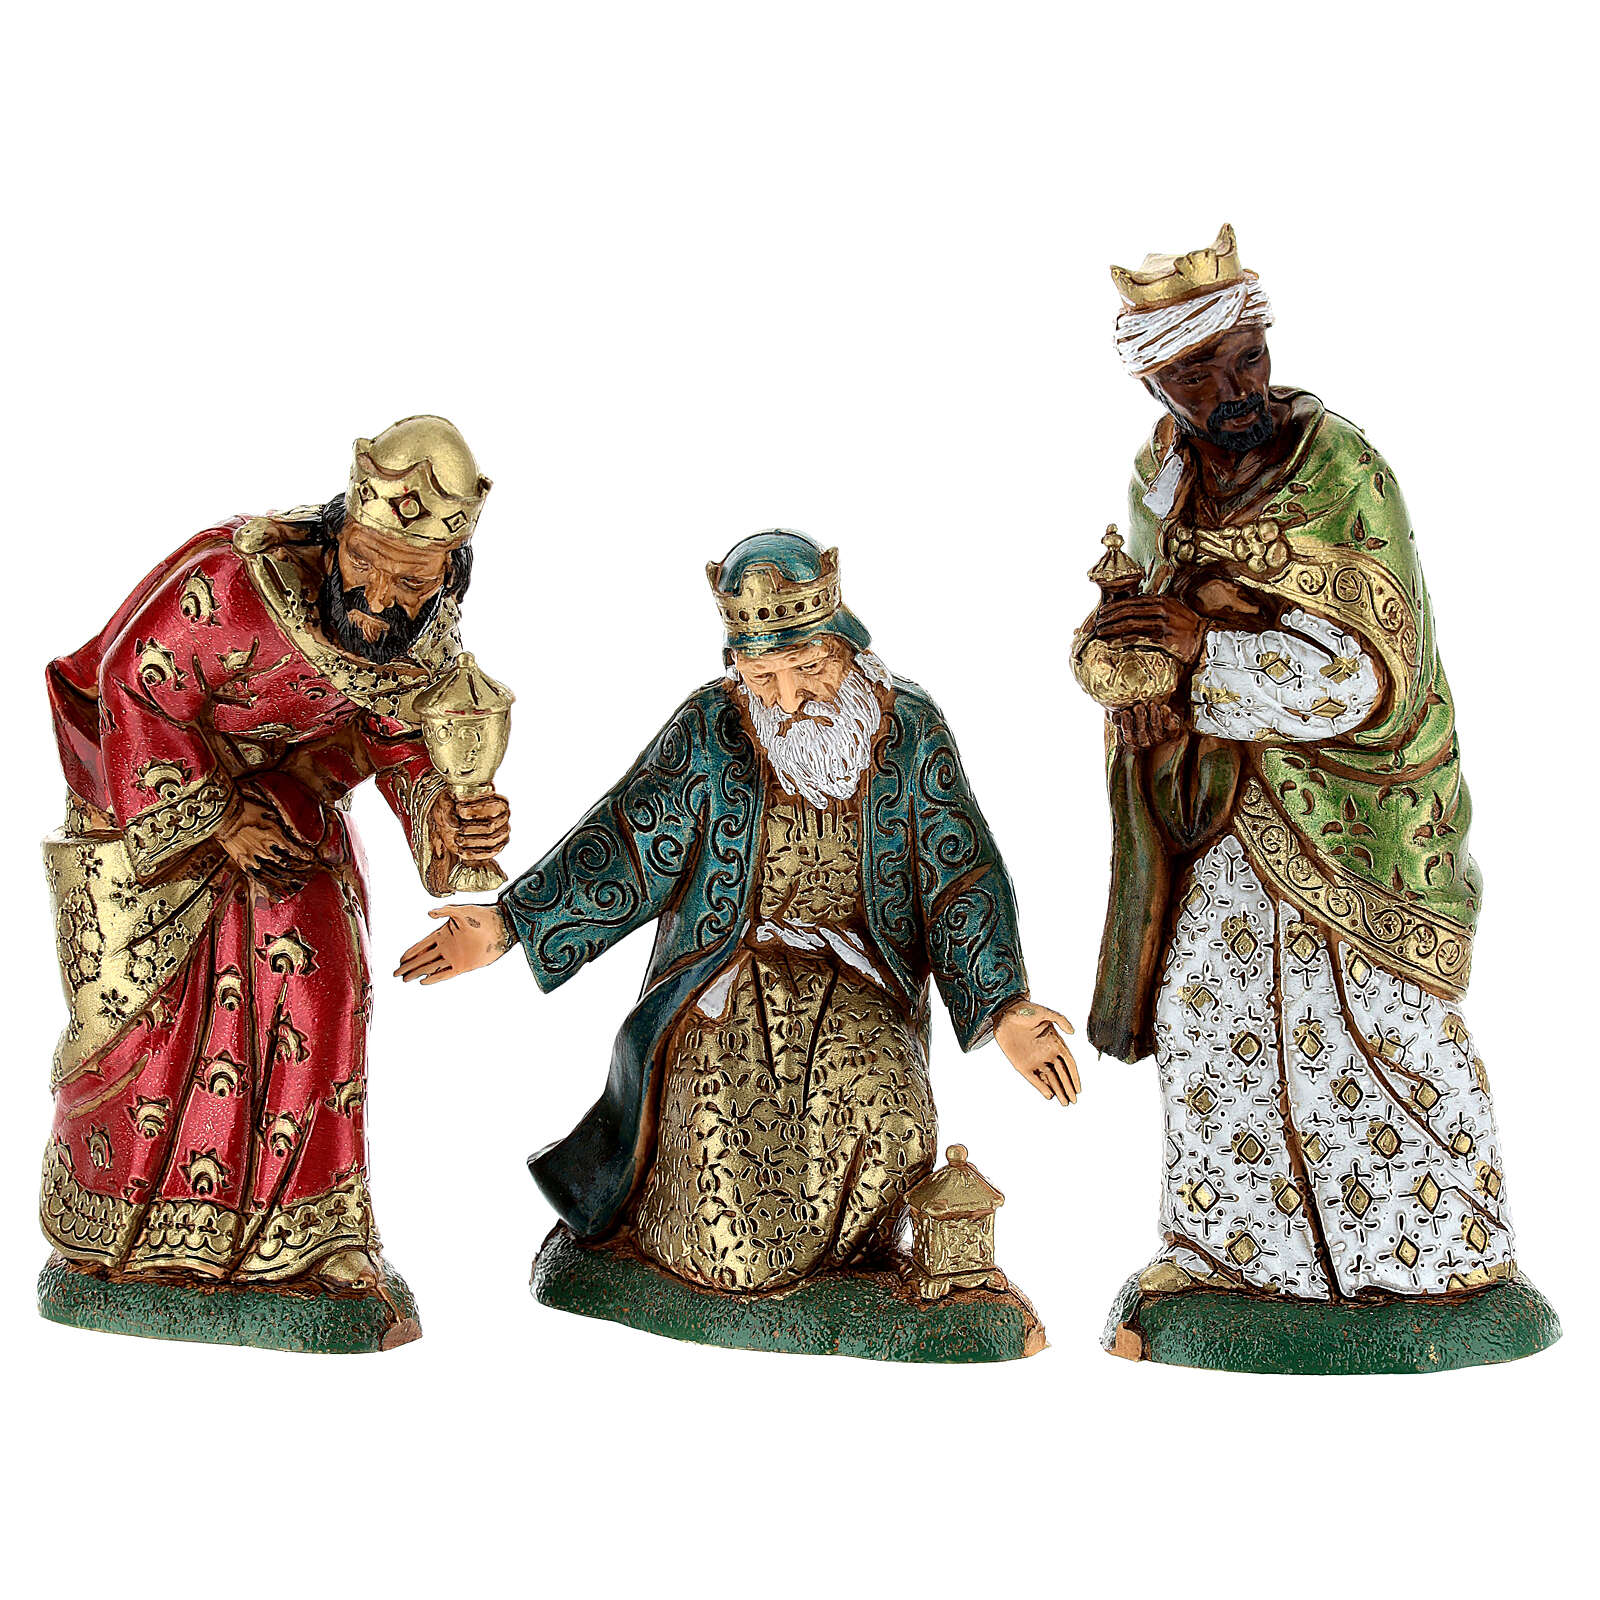 Wise men, 3 nativity figurines, 12cm Moranduzzo | online sales on ...